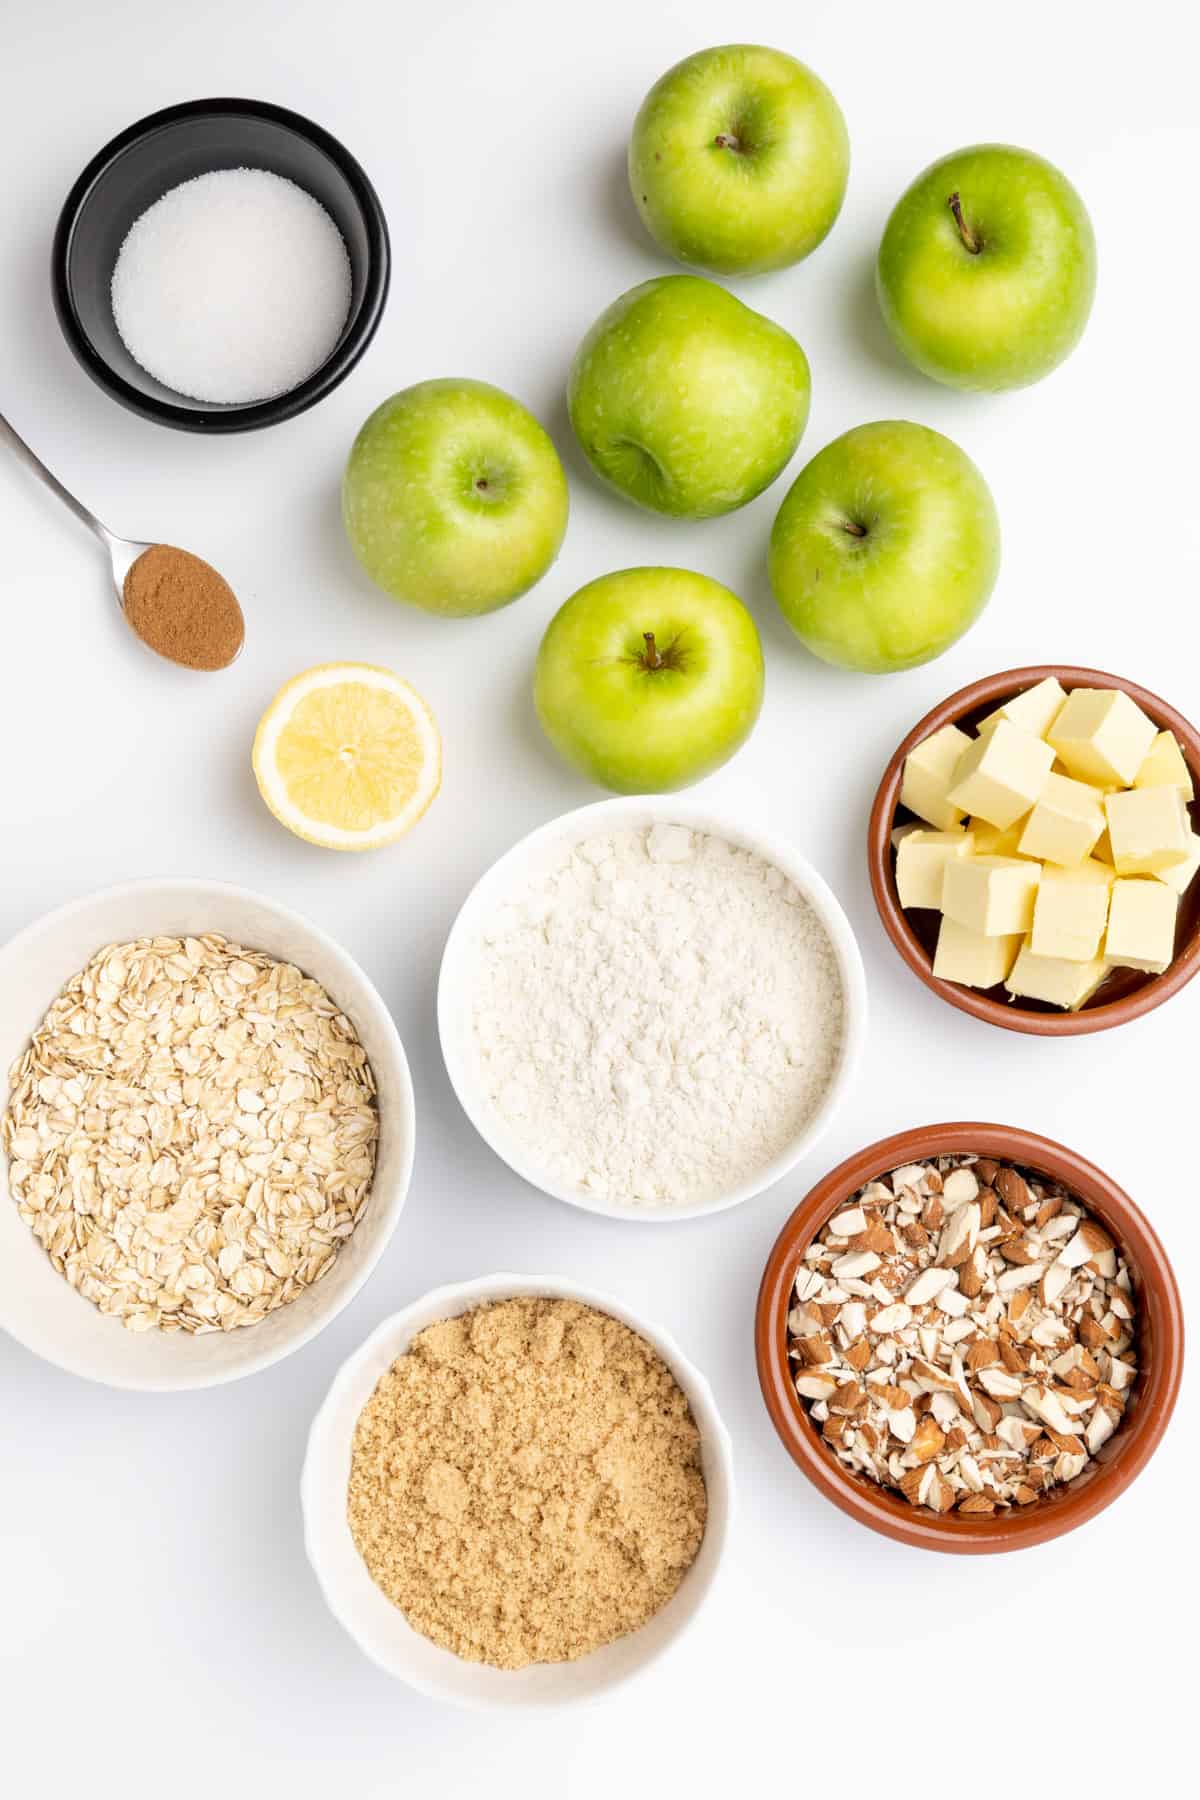 Ingredients for vegan apple crisp on a white surface.